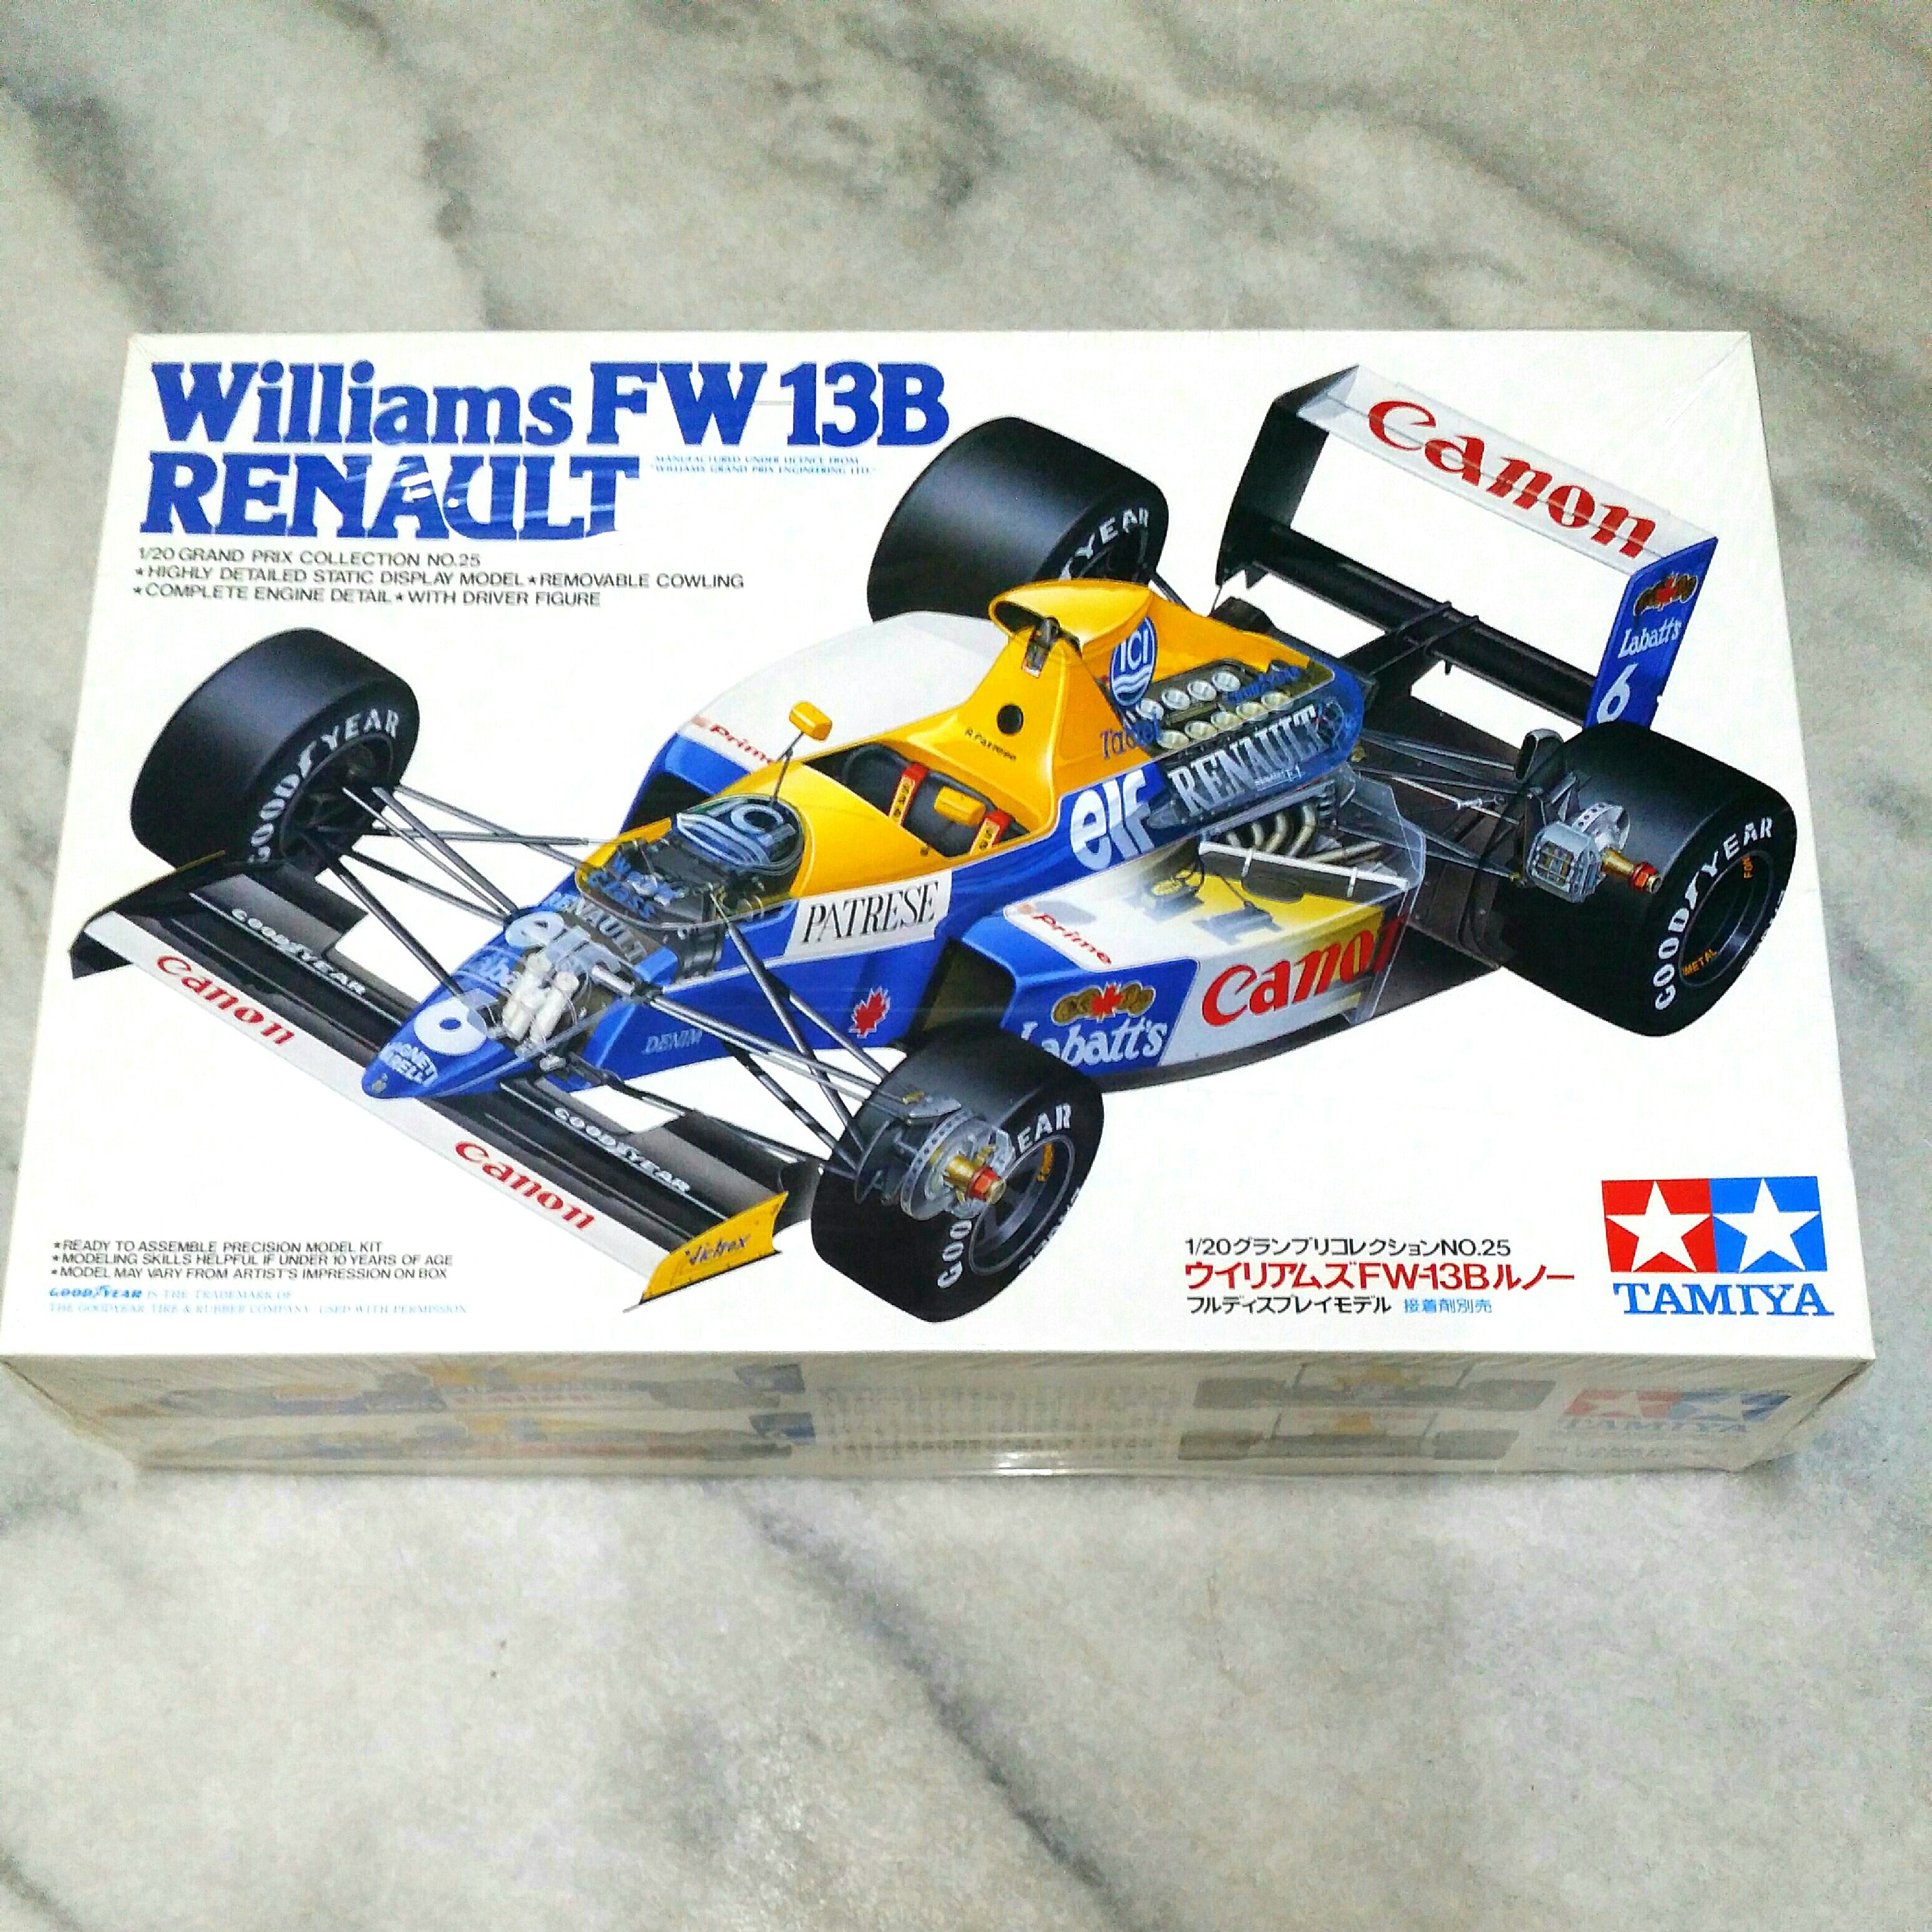 Details about   Williams FW13B Renault 1990 Tamiya 1/20 Grand Prix Series No.25 